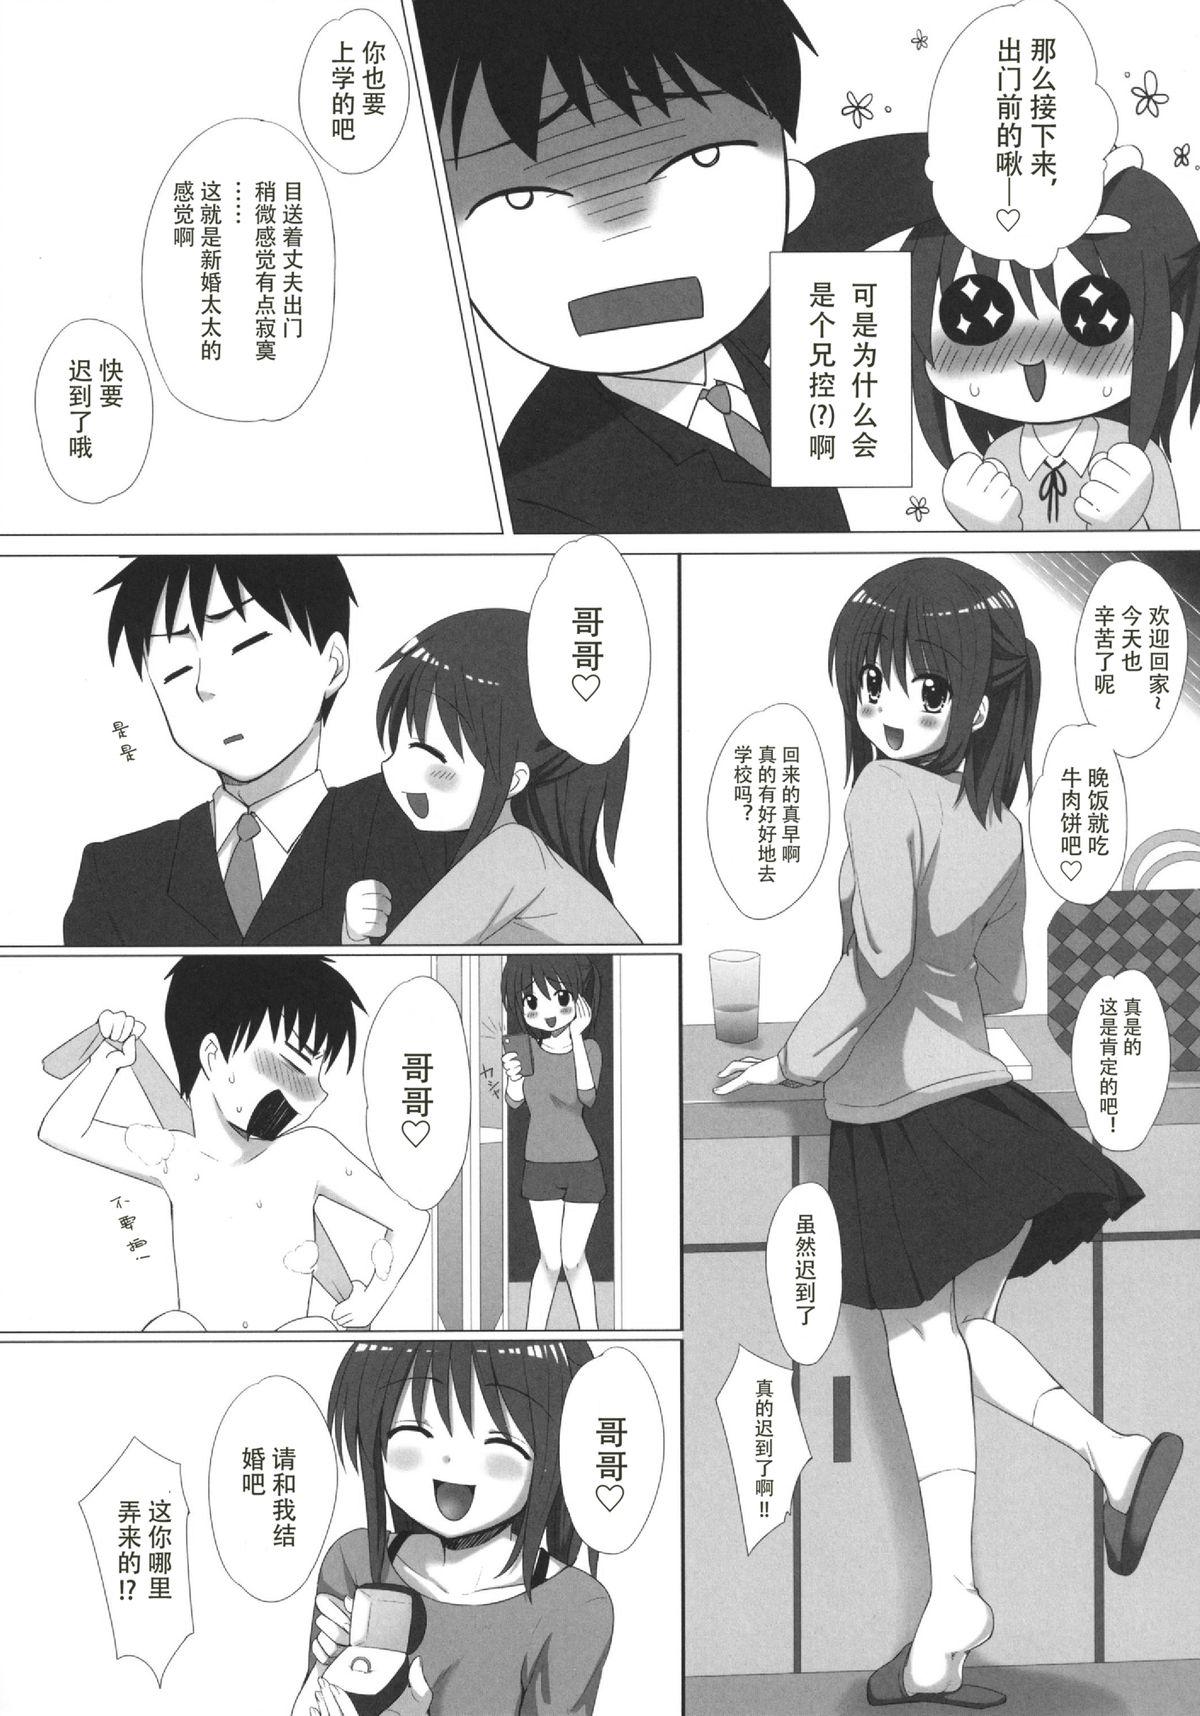 Tanned Onii-chan, Kozukuri Shiyou? Fun - Page 5